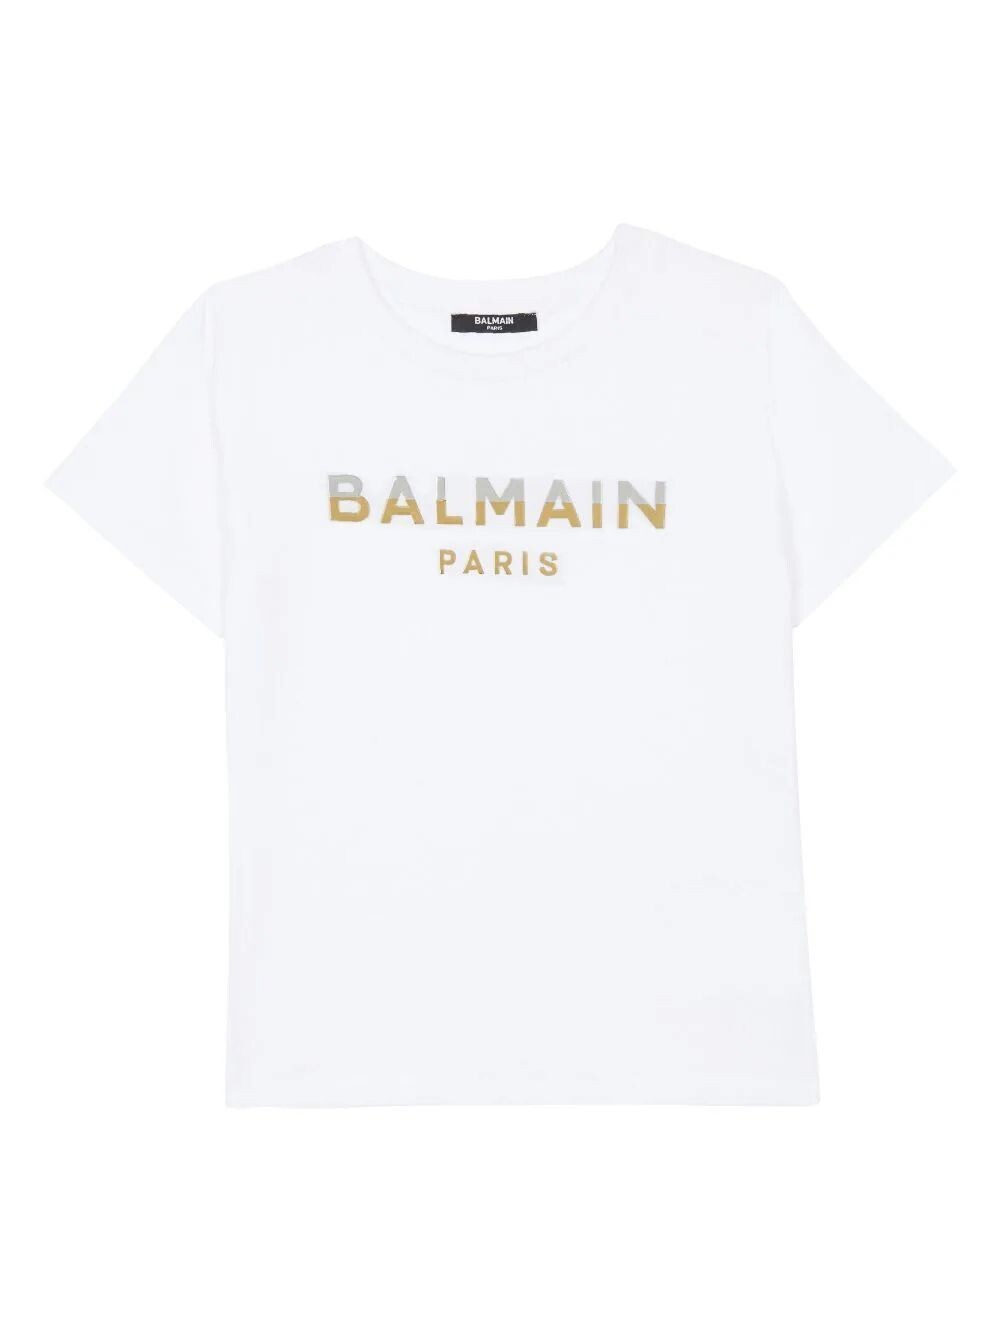 Balmain - T-shirt bianca logo oro argento, Size: 13 anni